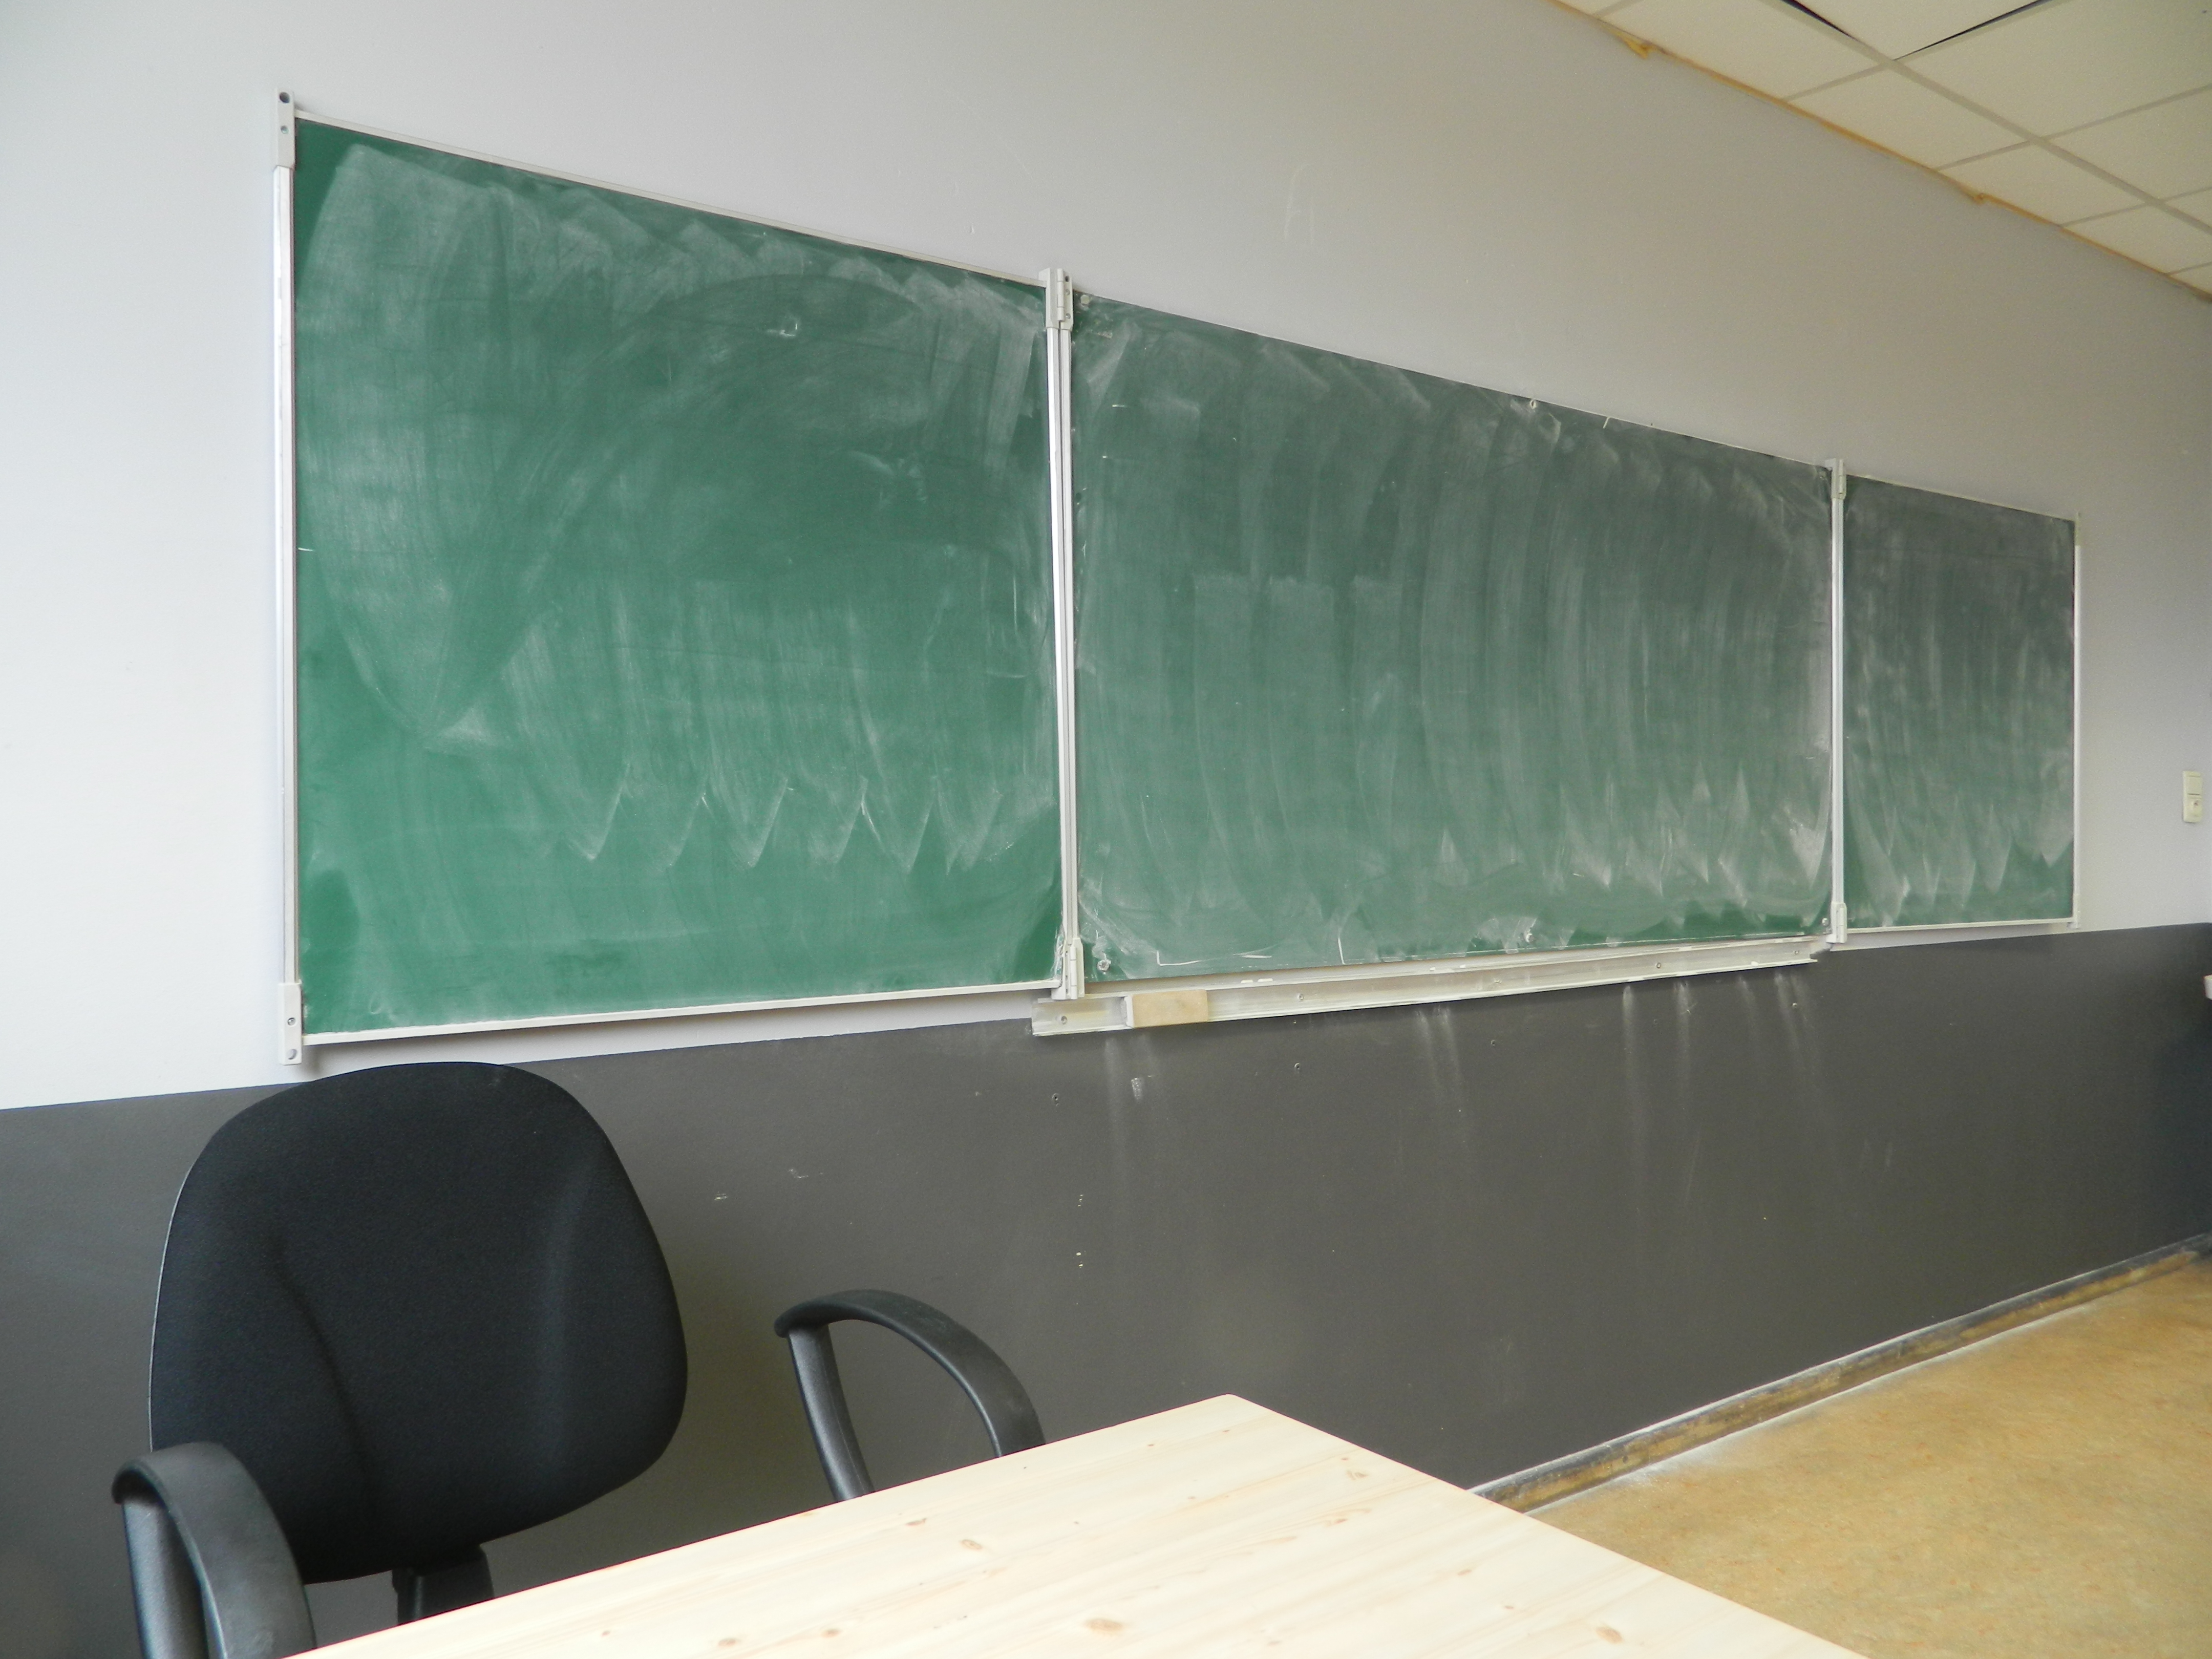 Background Classroom: Blackboard view by Kidpaddleetcie on DeviantArt